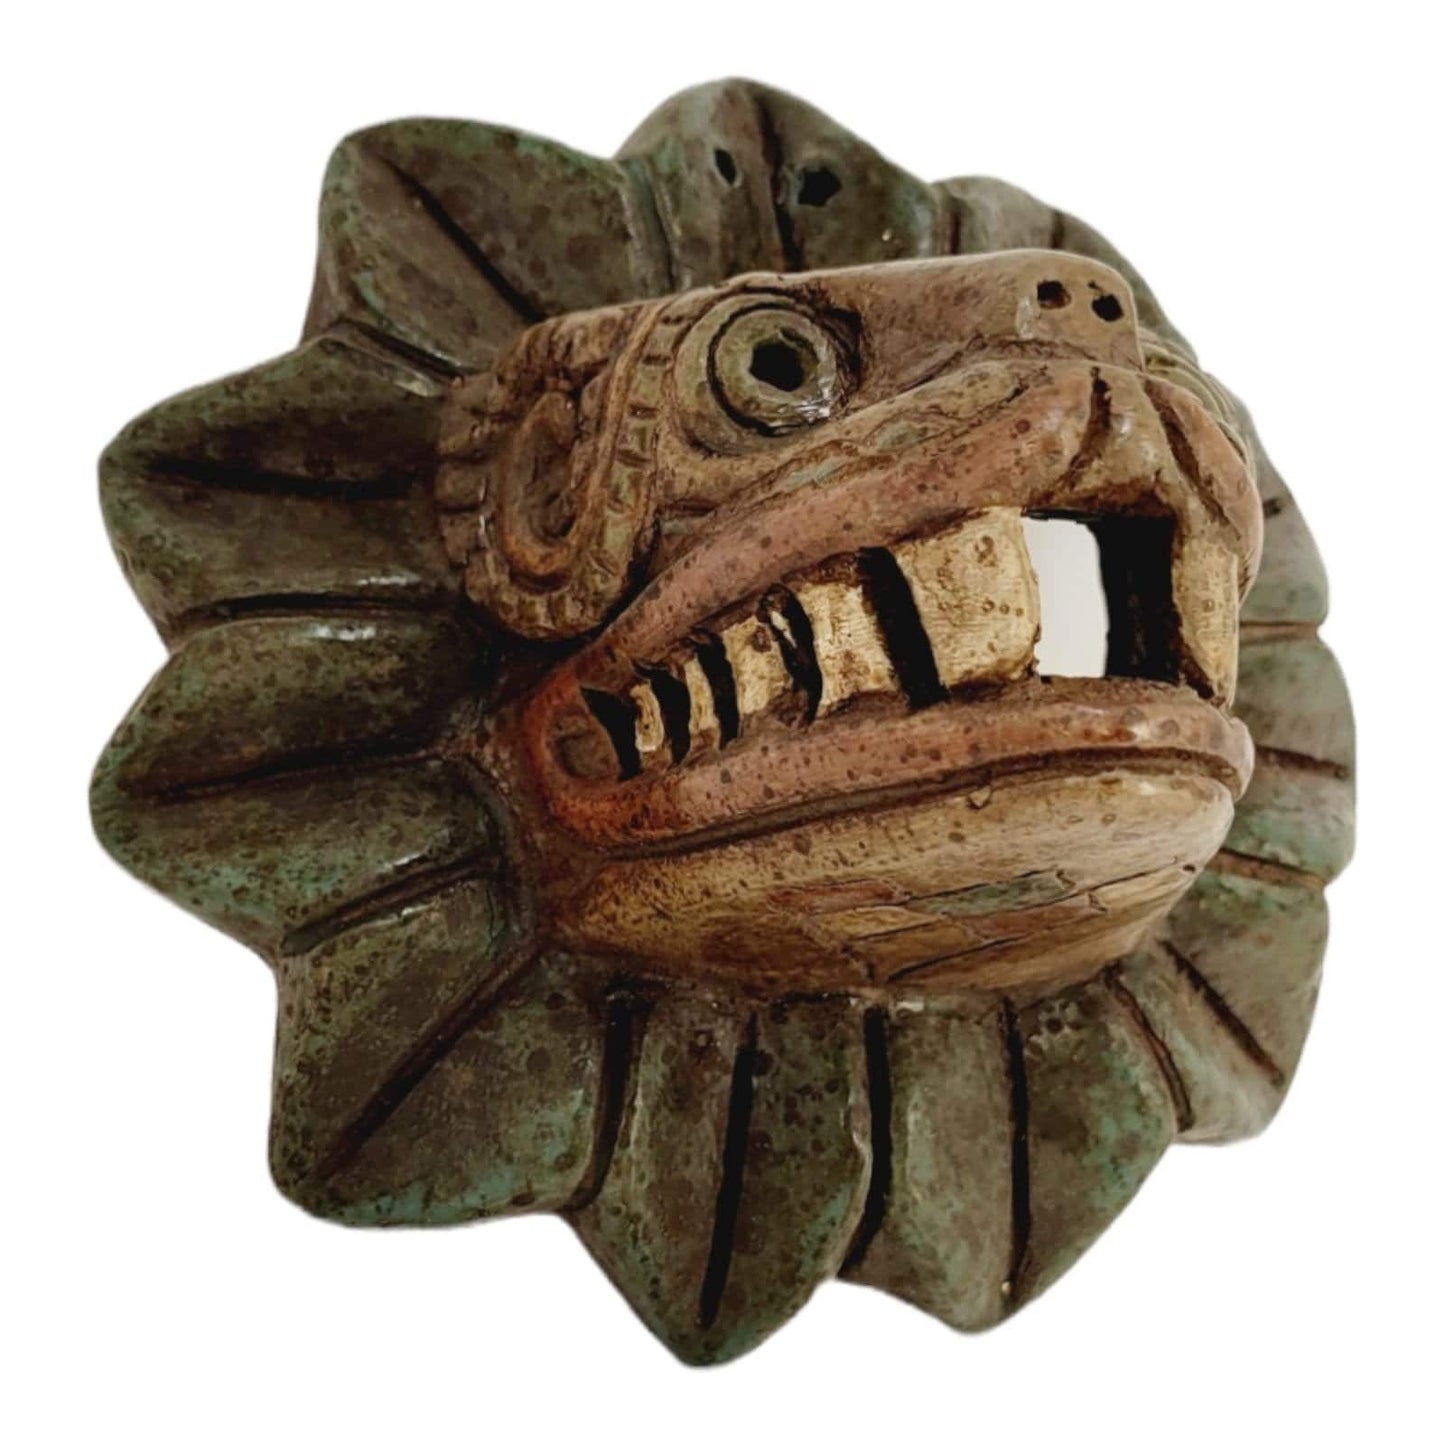 Colorful Quetzalcoatl Wall Decor Replica - Aztec Feathered Serpent Dragon